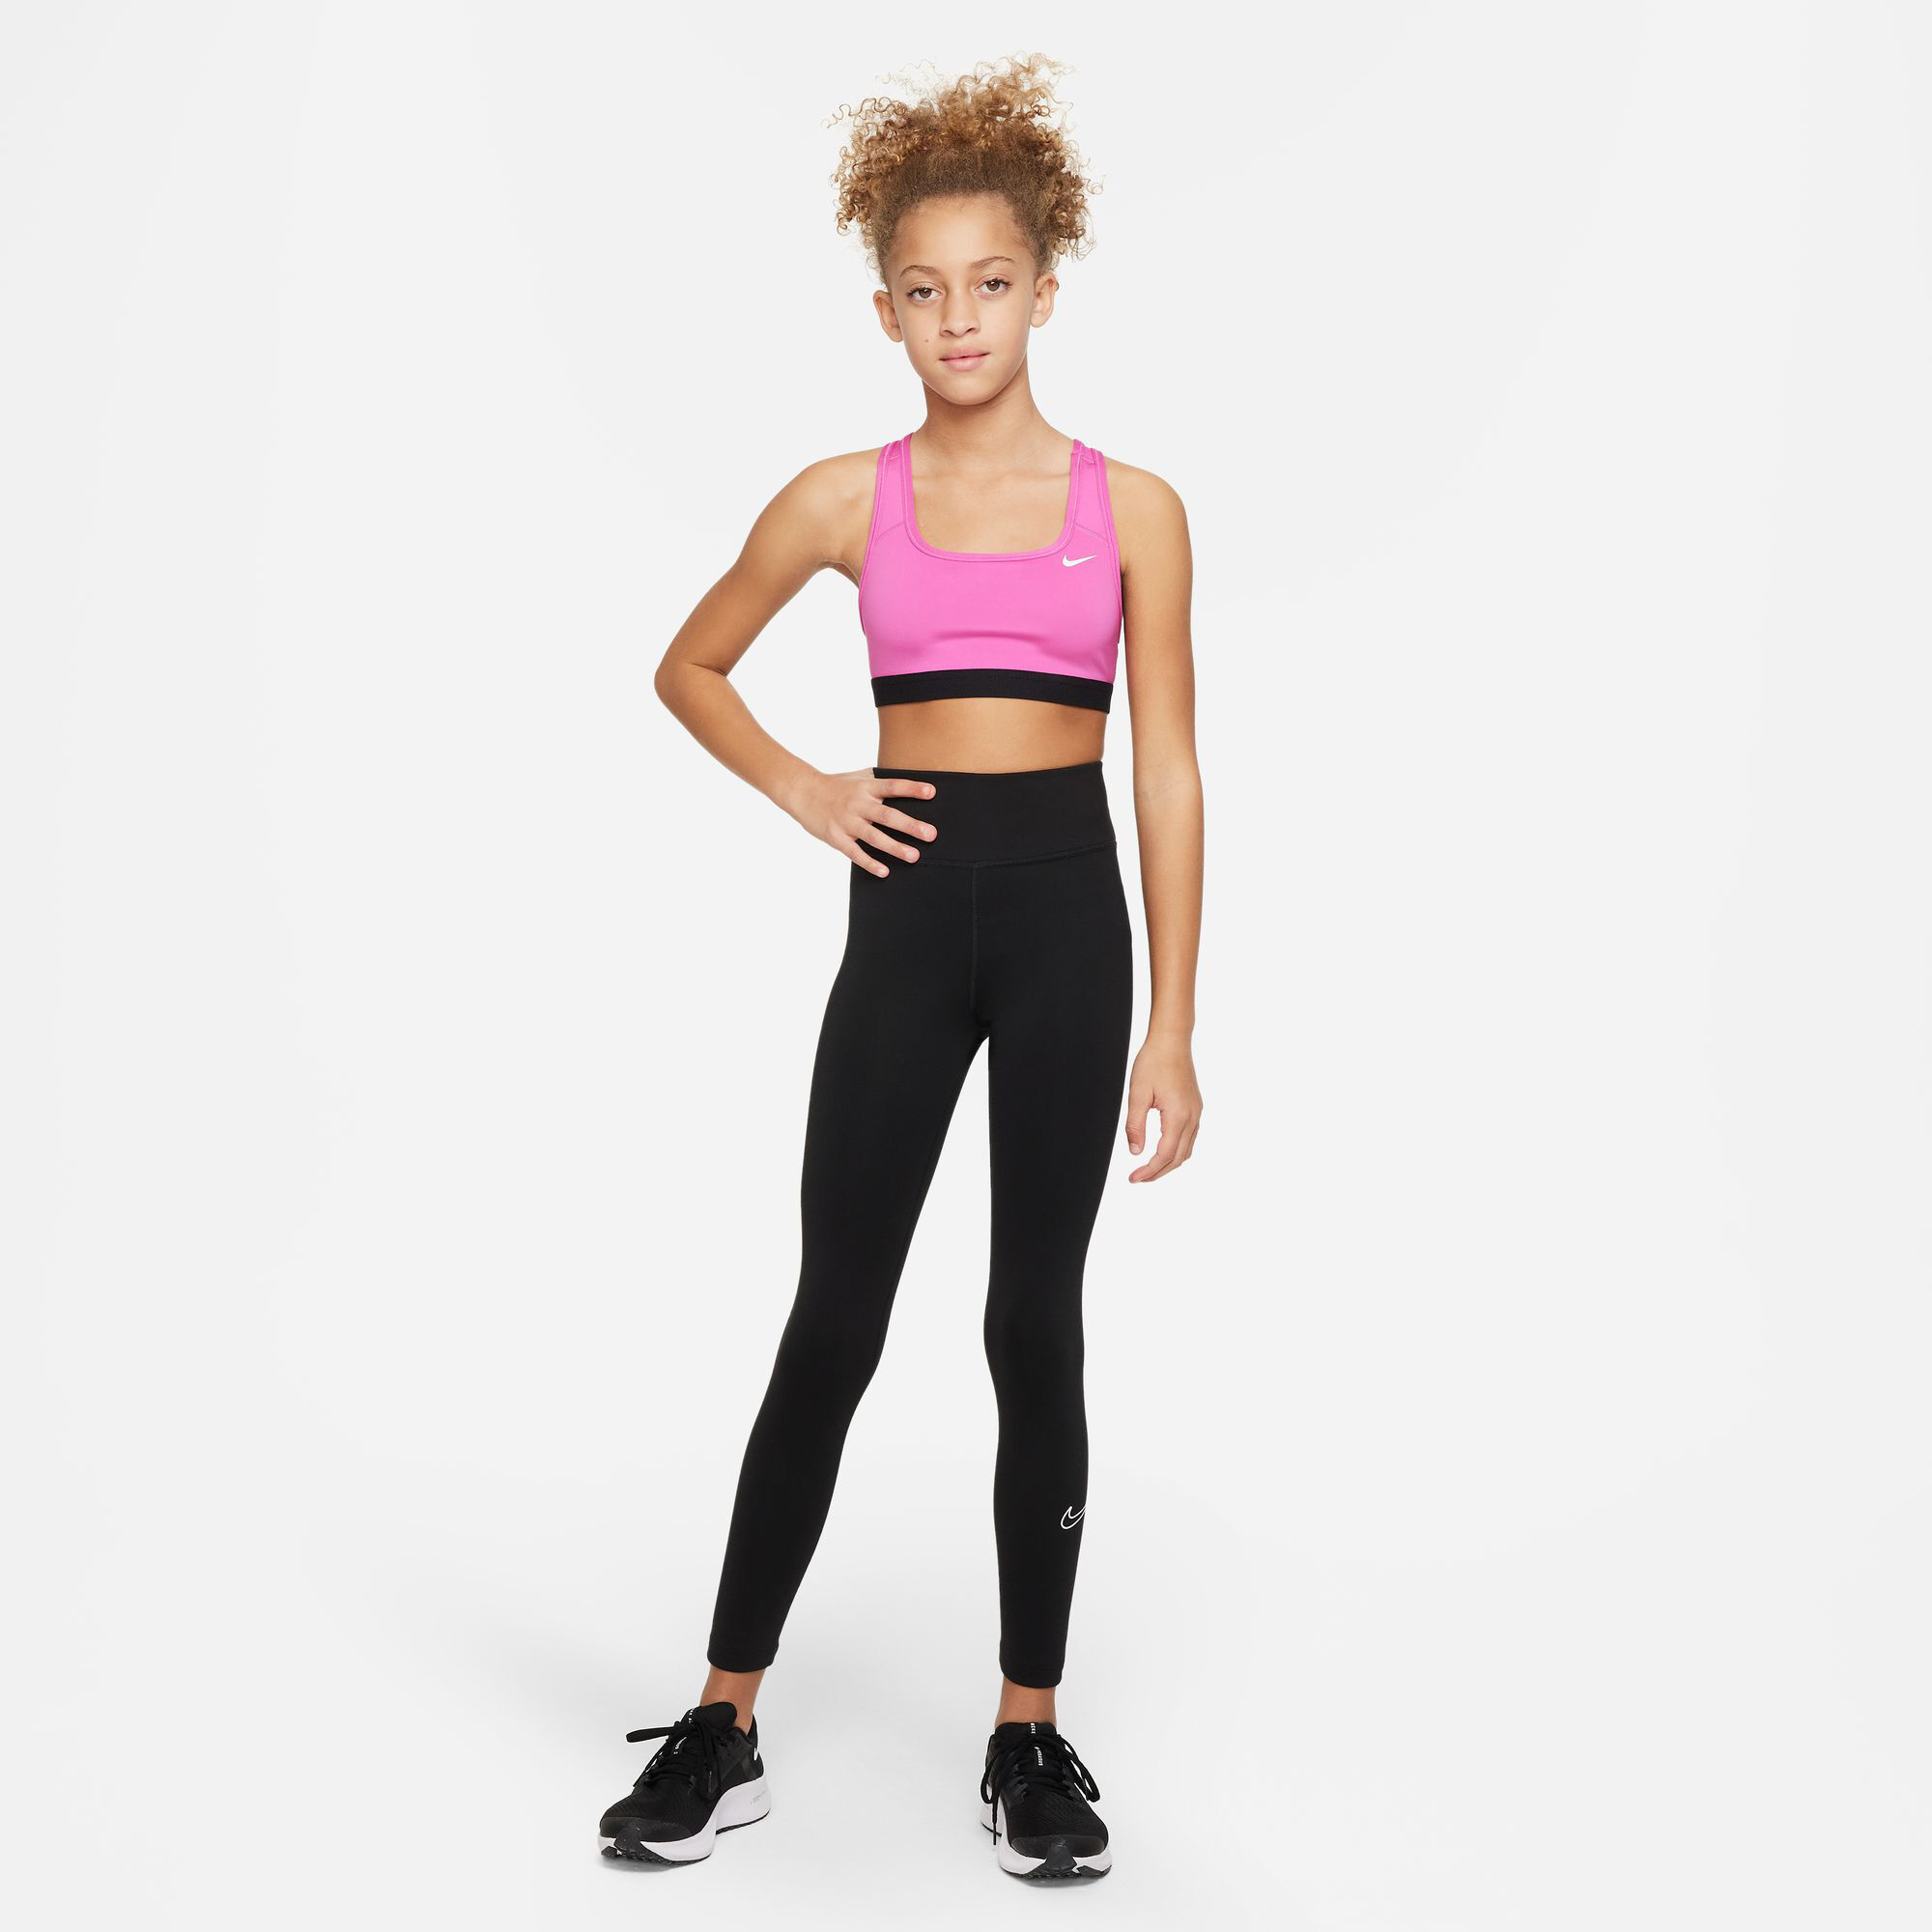 Nike Girl's S Small Criss-Cross Sports Bra Bubblegum Pink - Free Shipping